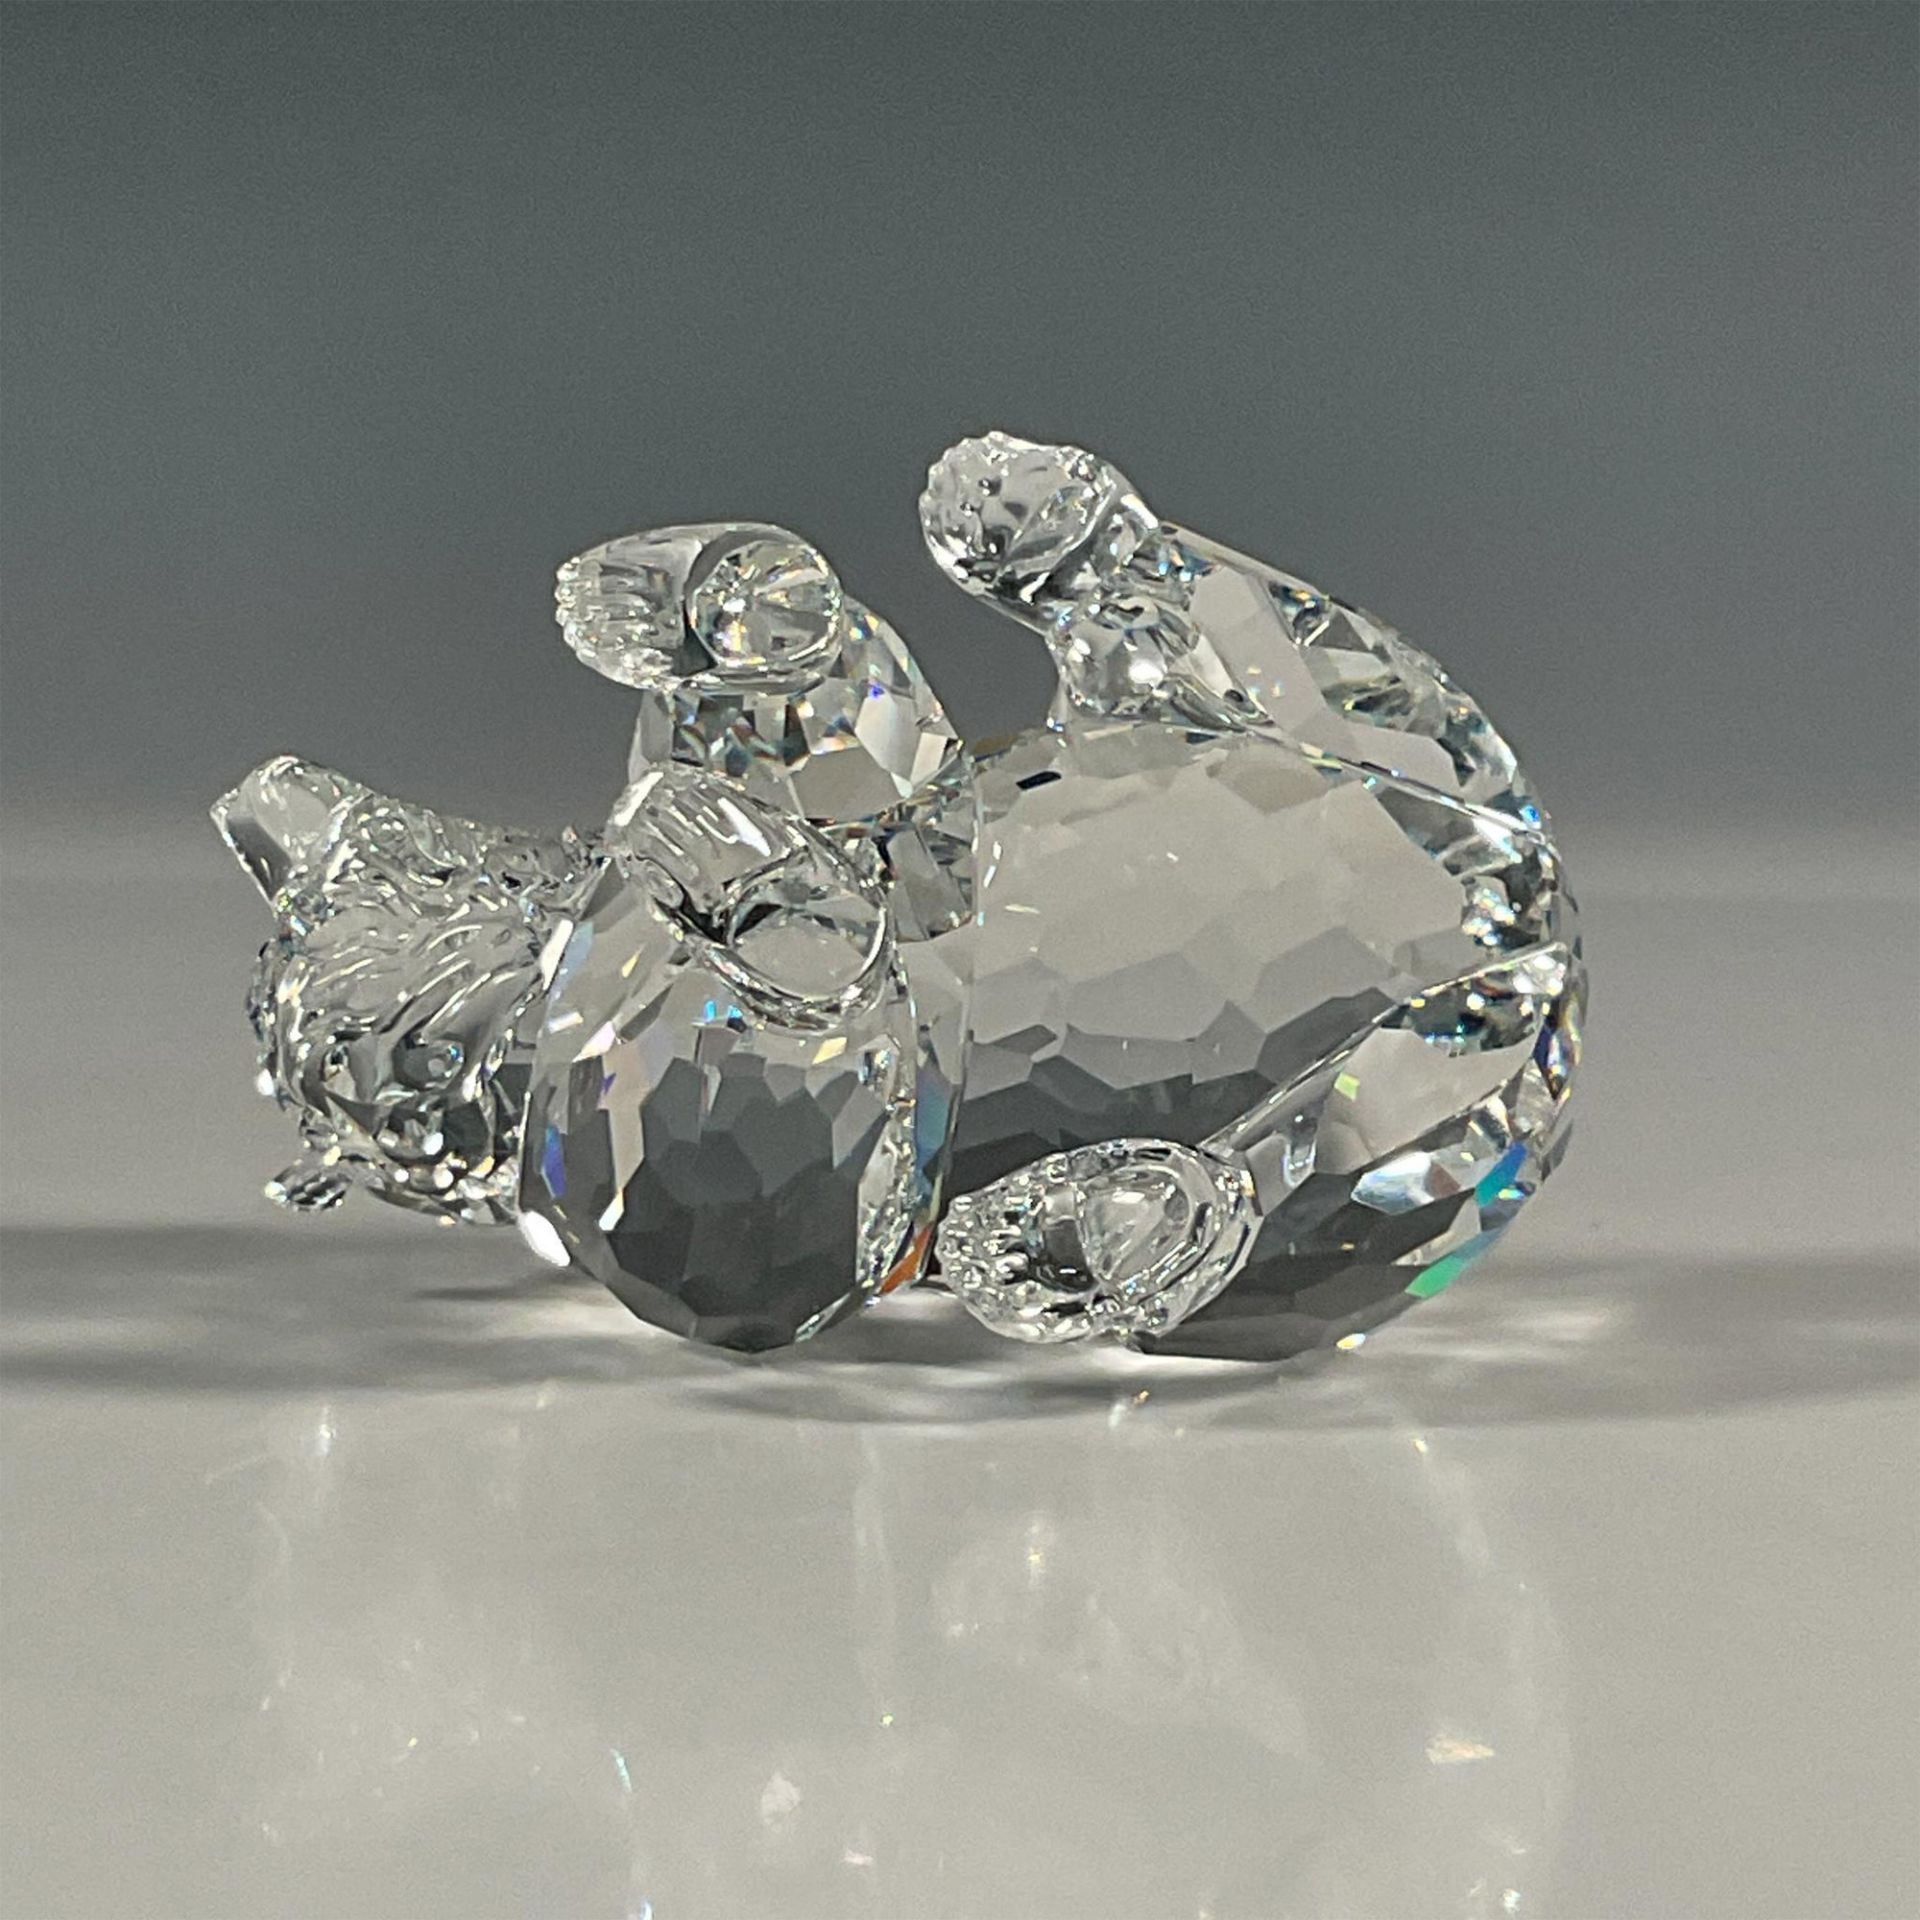 Swarovski Silver Crystal Figurine, Grizzly - Image 4 of 4